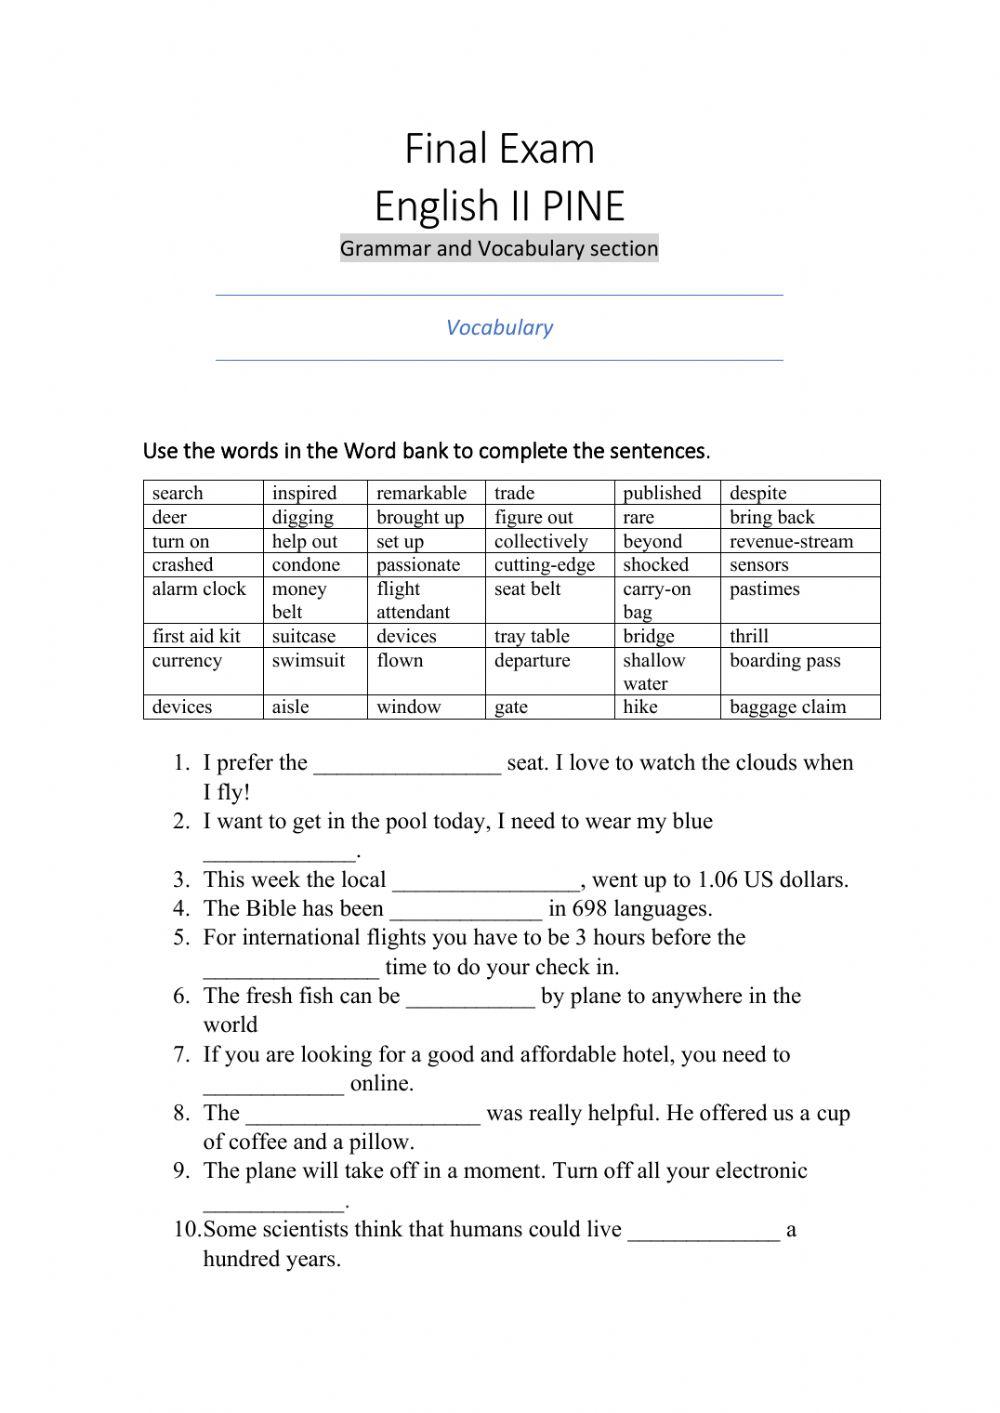 Final exam: Language use section